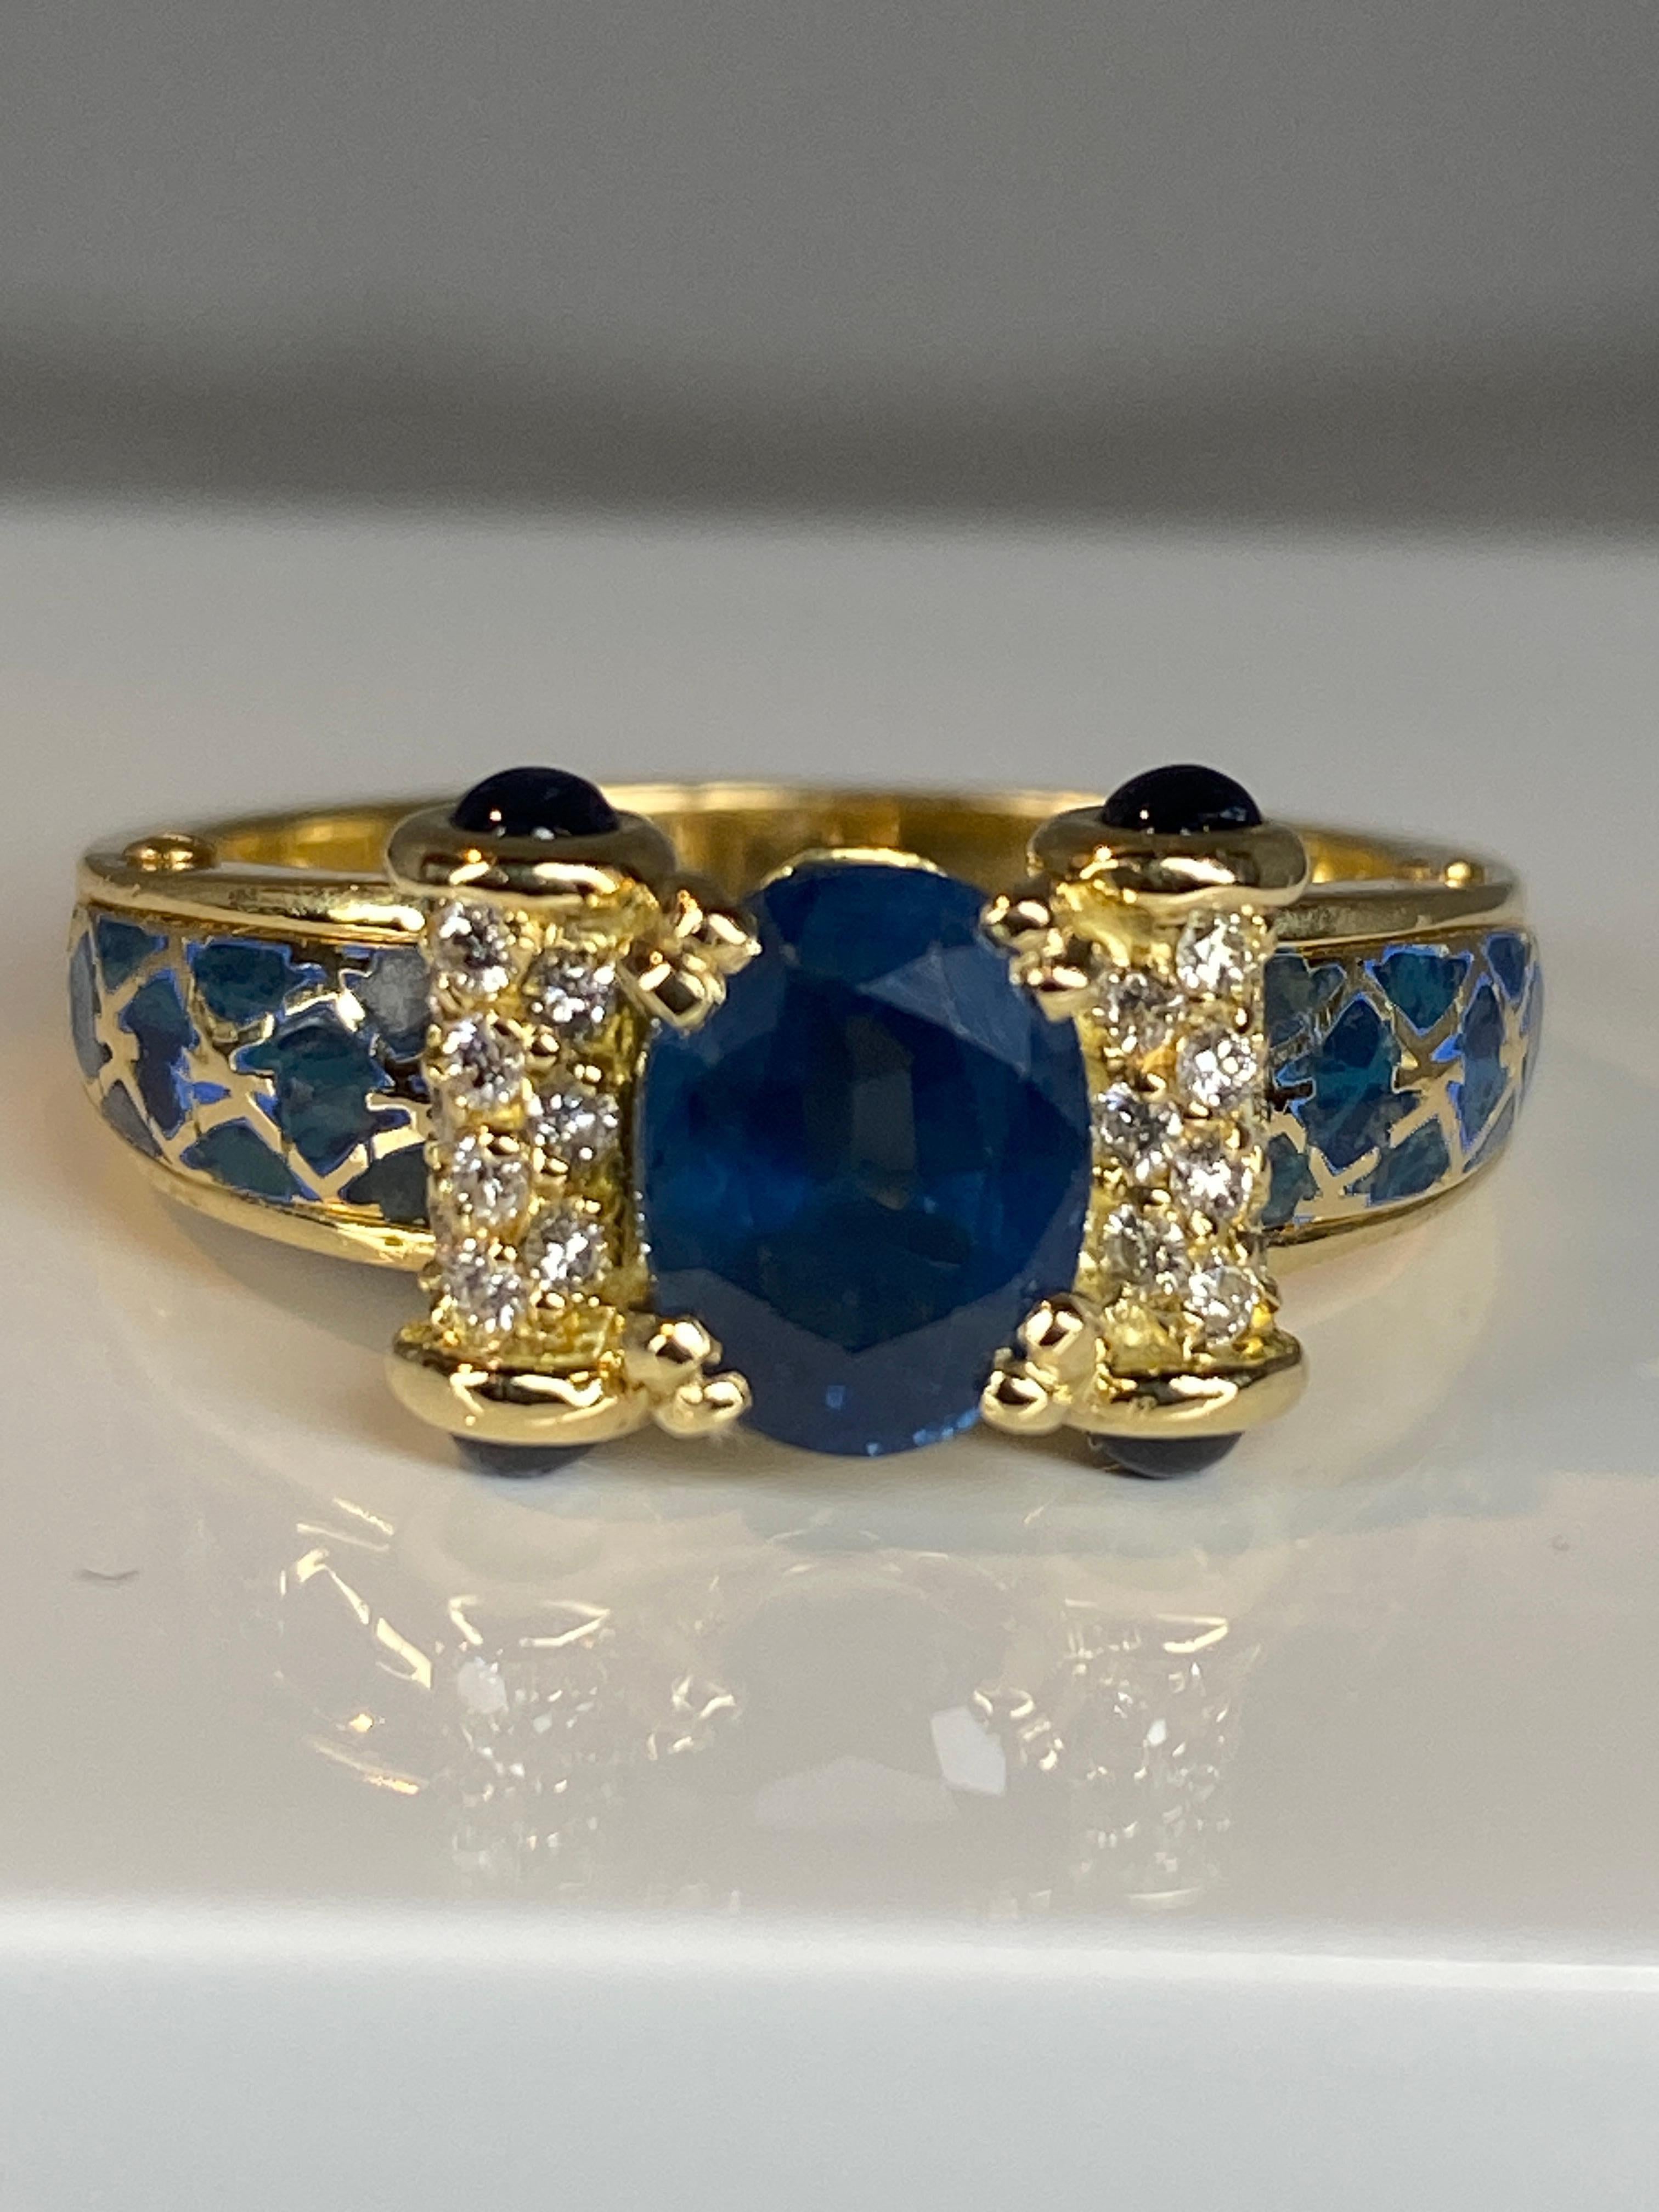 Korloff Ring in 18 Carat Gold: Sapphires, Diamonds, Blue Enamel For Sale 11